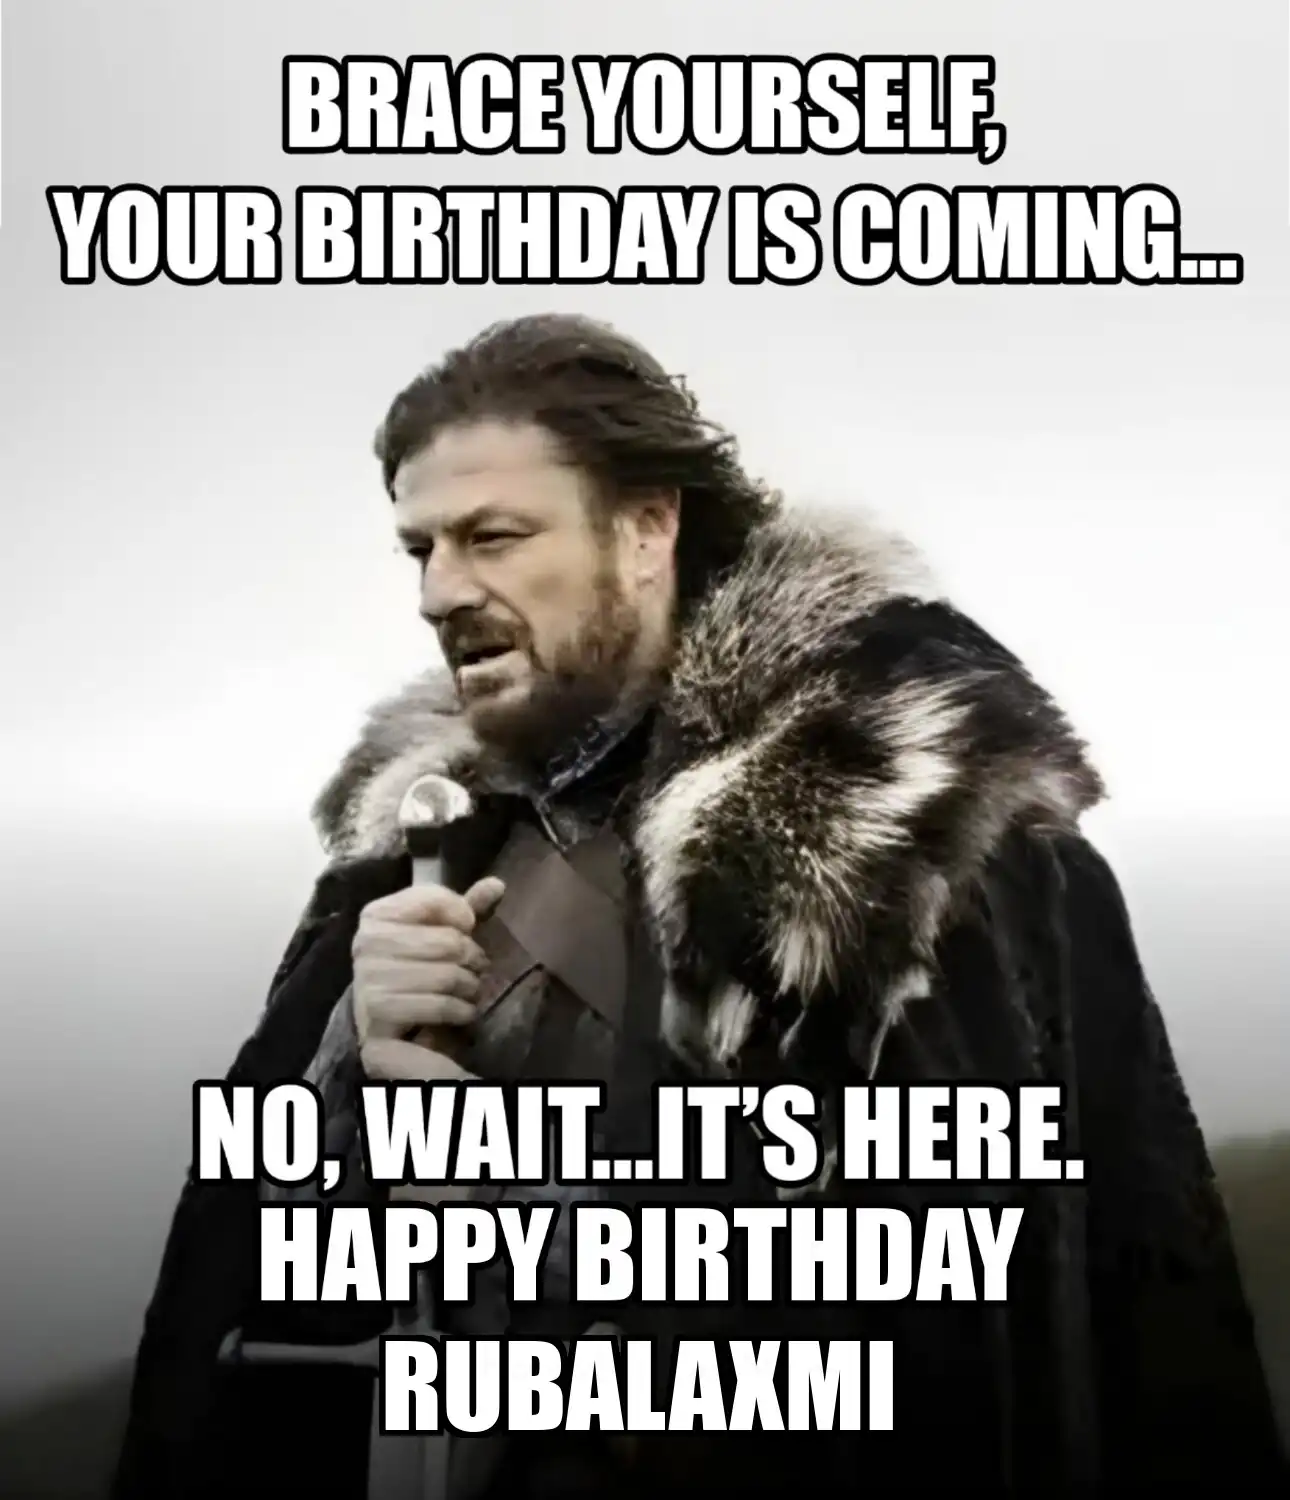 Happy Birthday Rubalaxmi Brace Yourself Your Birthday Is Coming Meme